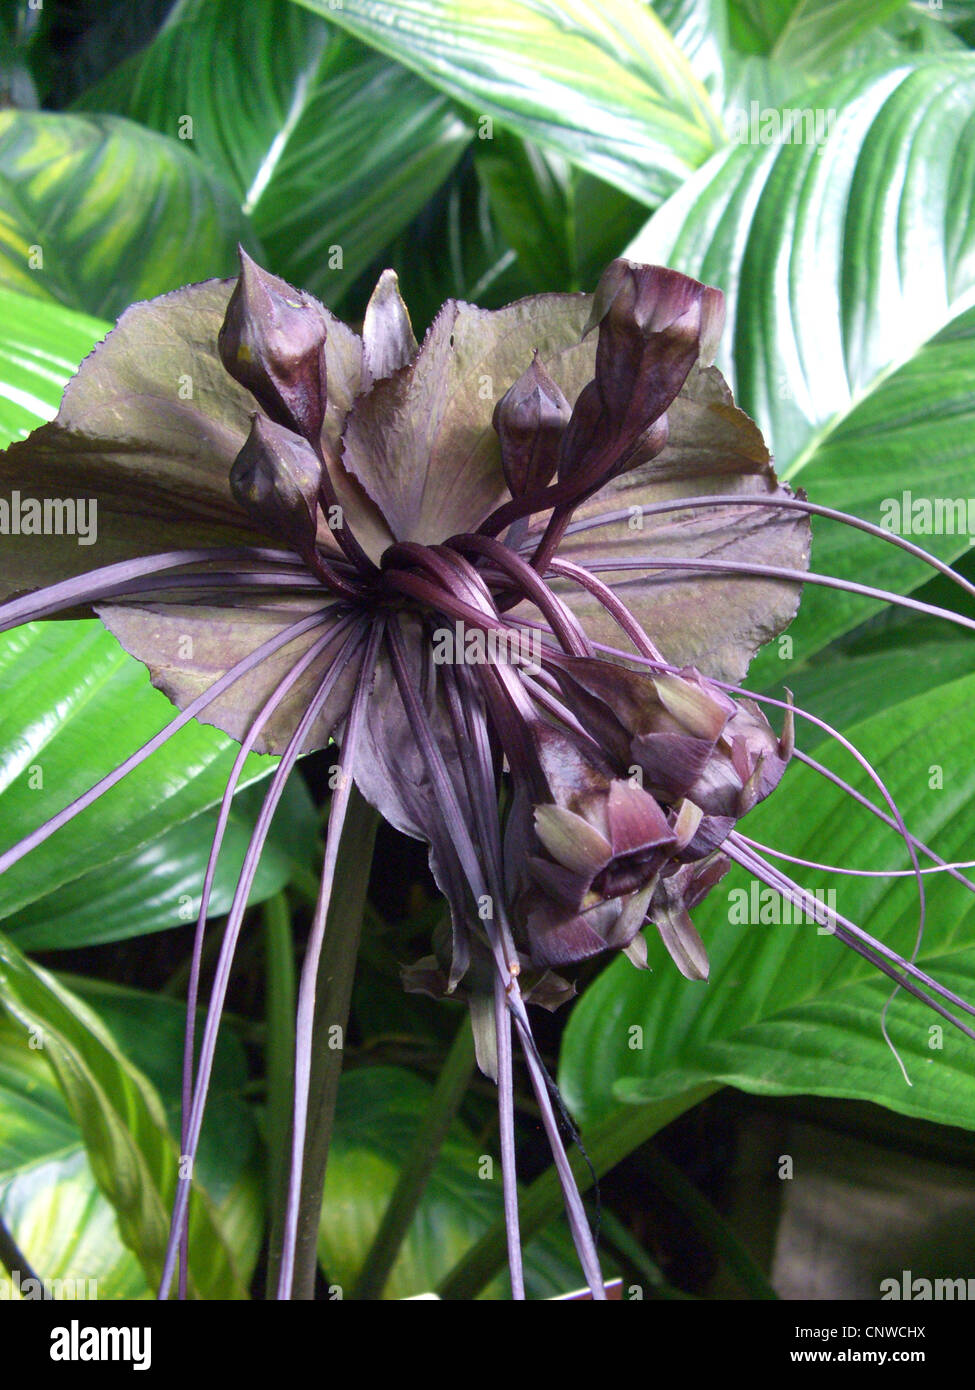 Bat plant tacca chantrieri fotografías e imágenes de alta resolución - Alamy